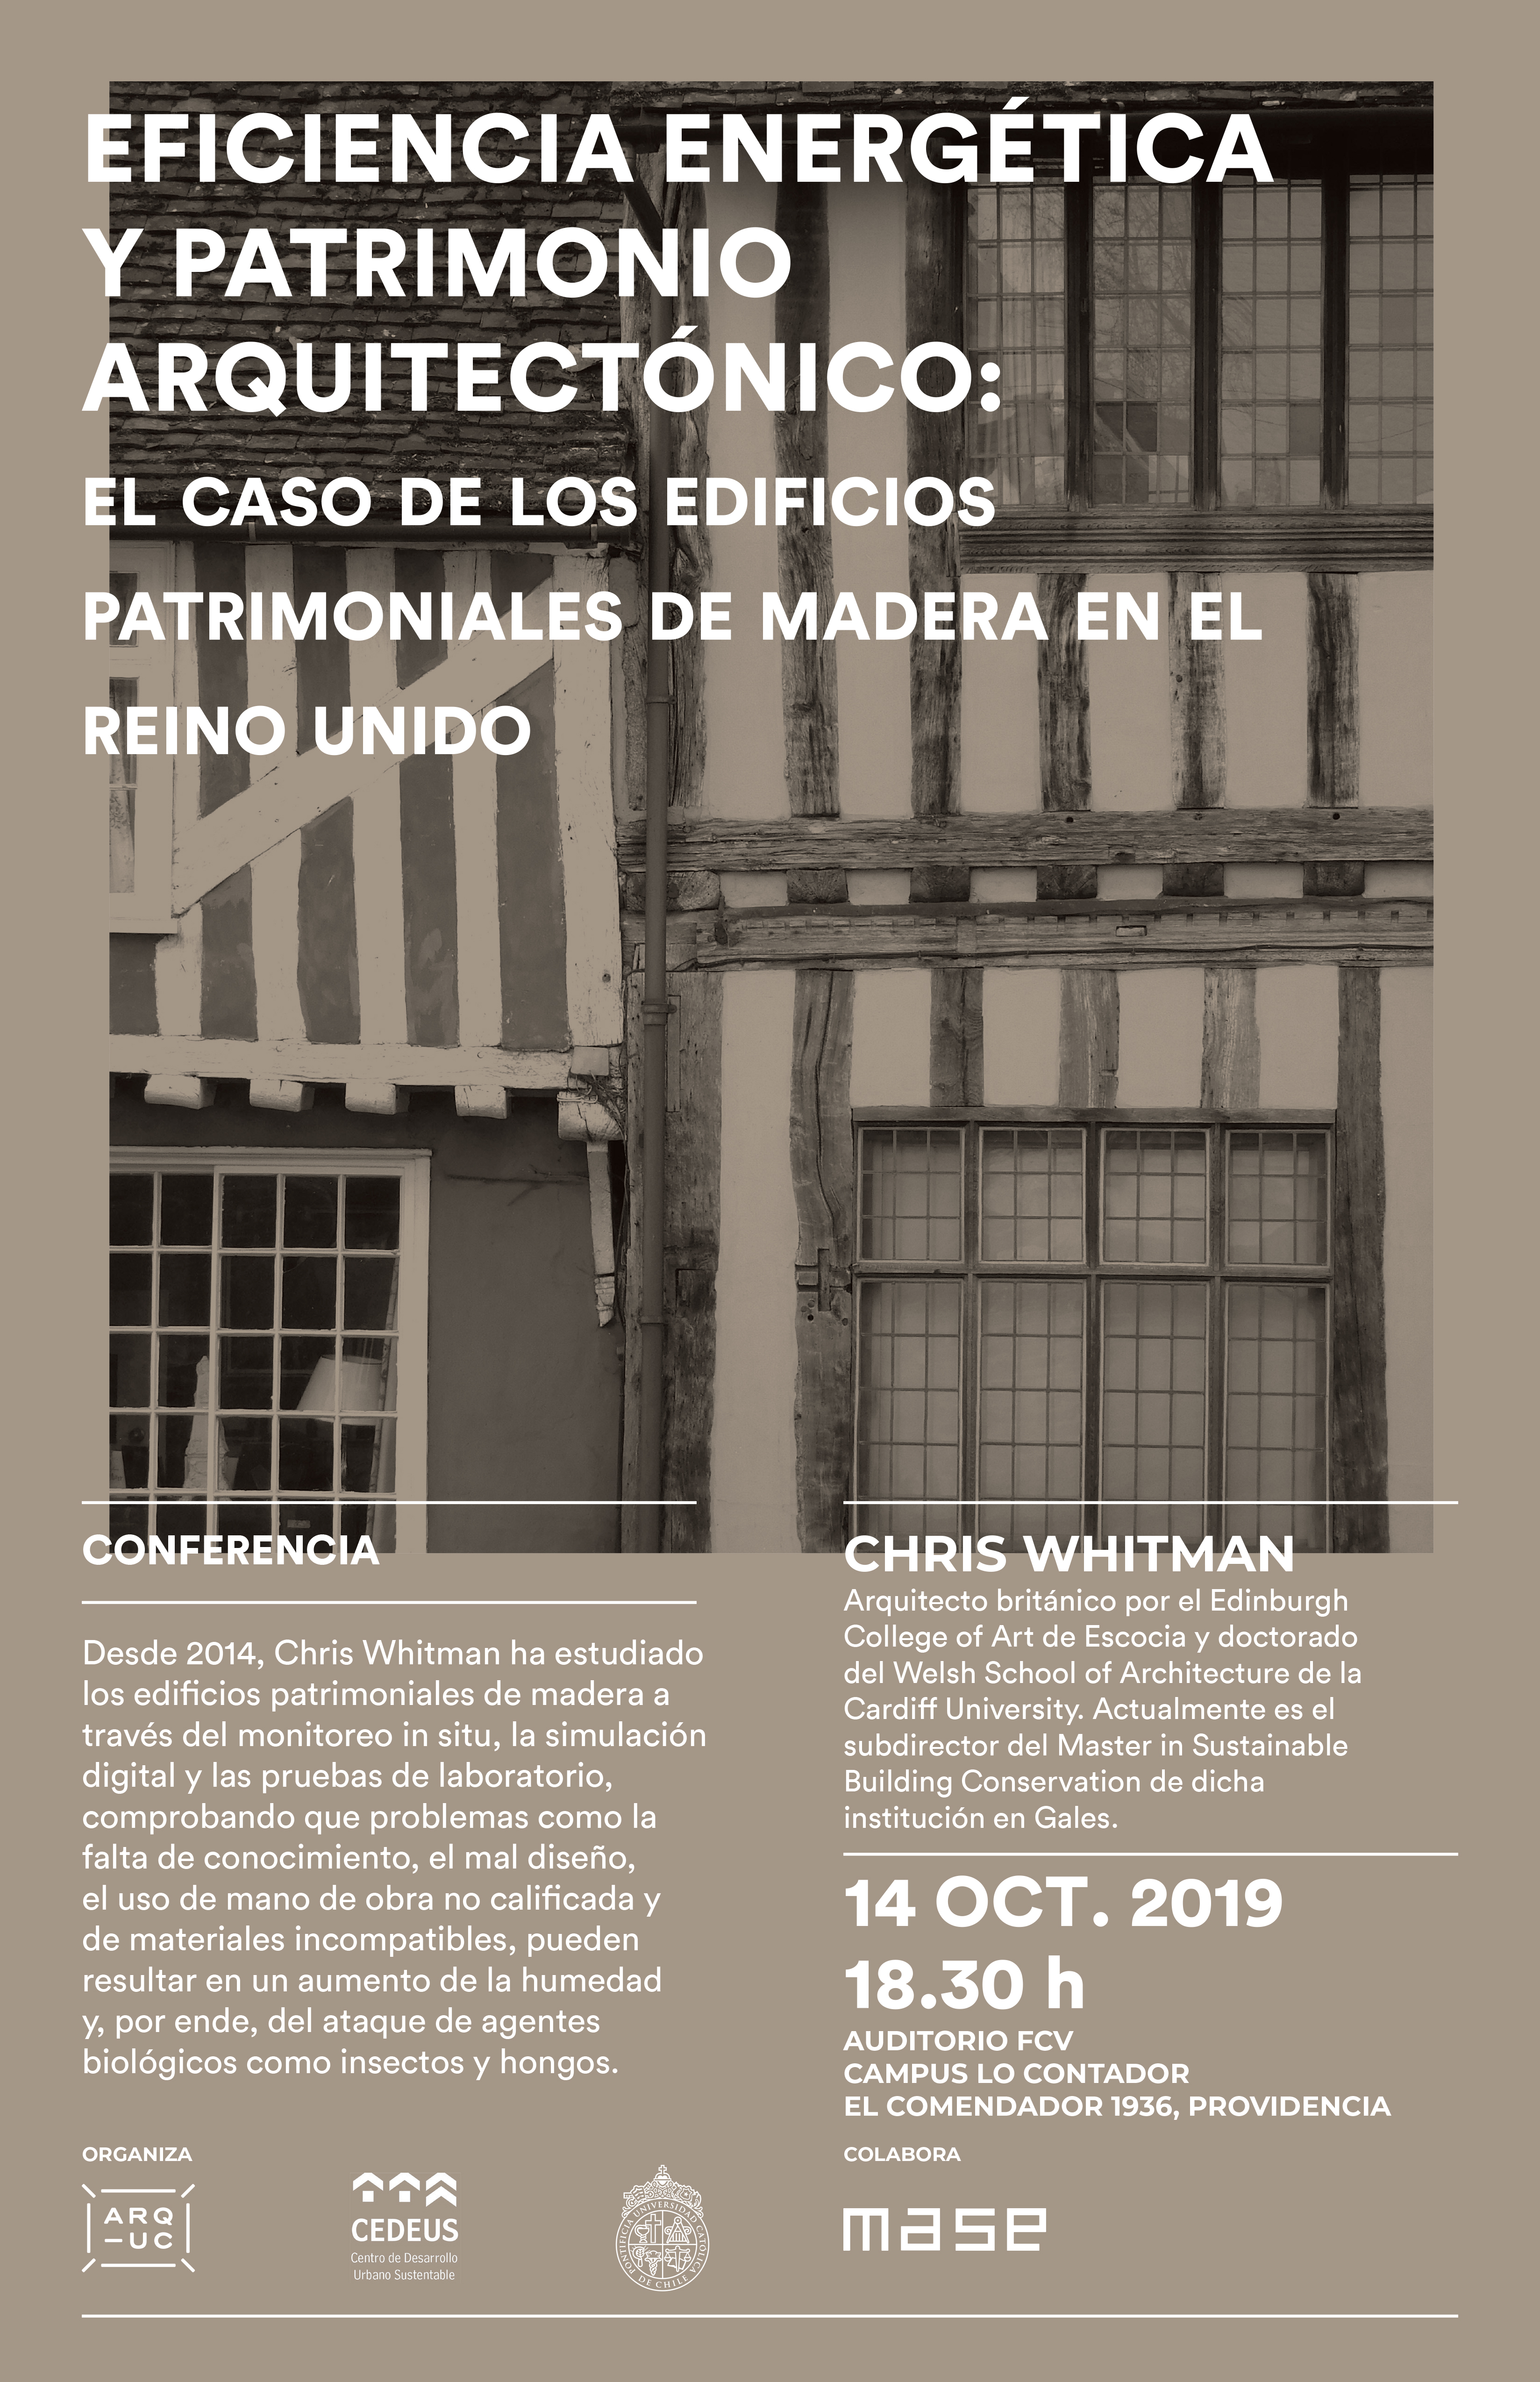 20191014_CEDEUS_Conferencia_de_Chris_Whitman_afiche_.jpg